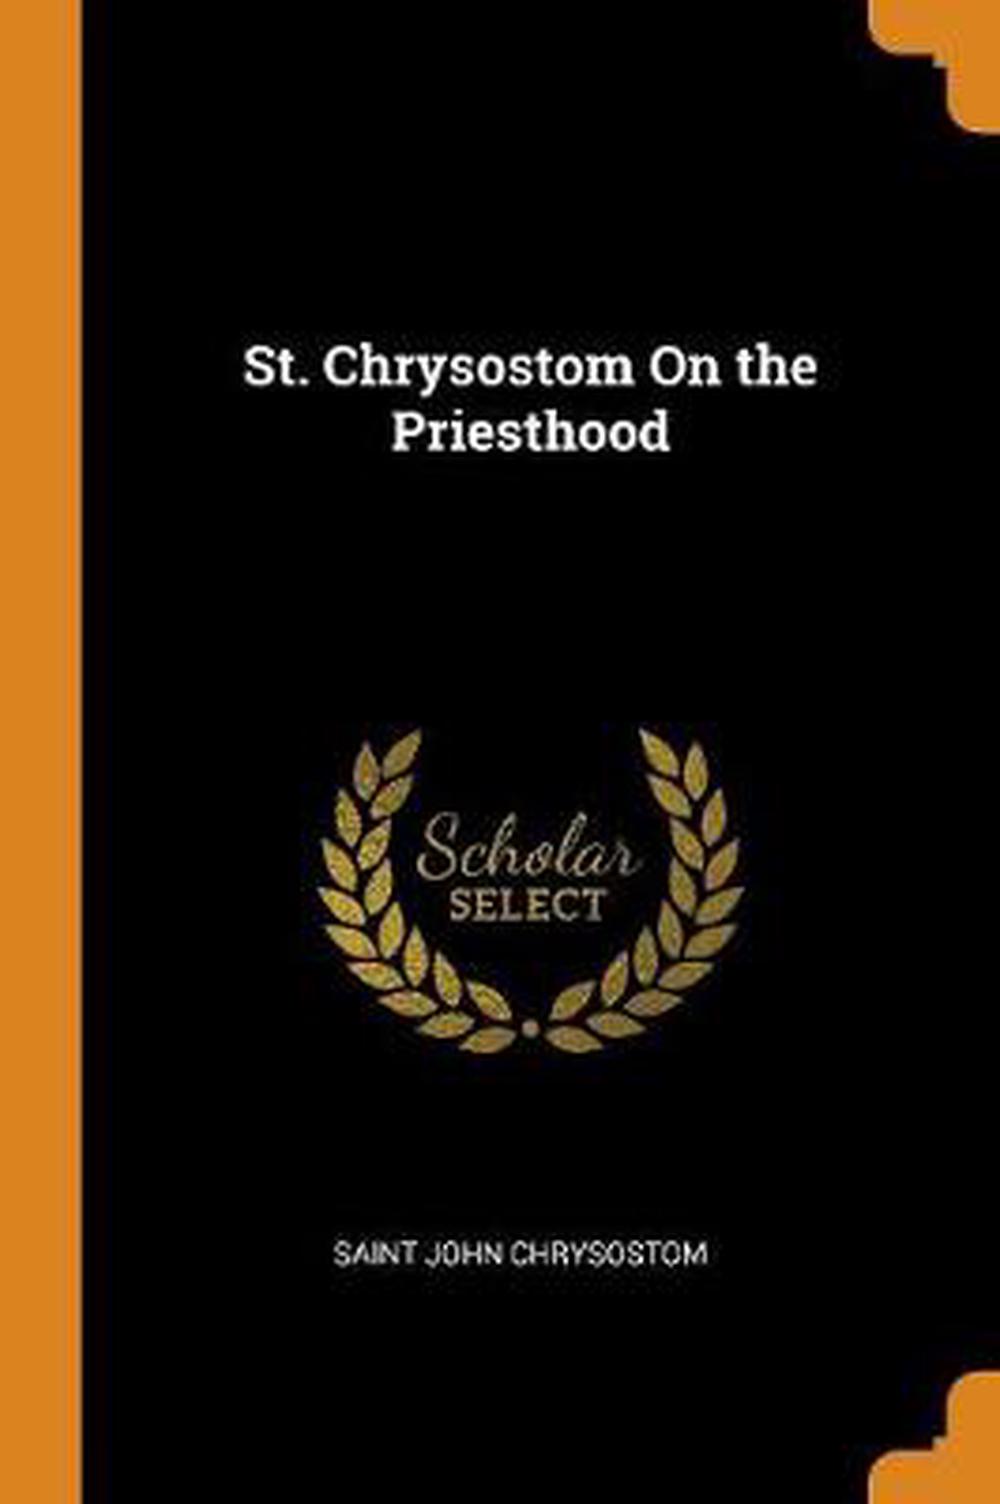 The Cult of the Saints by John Chrysostom